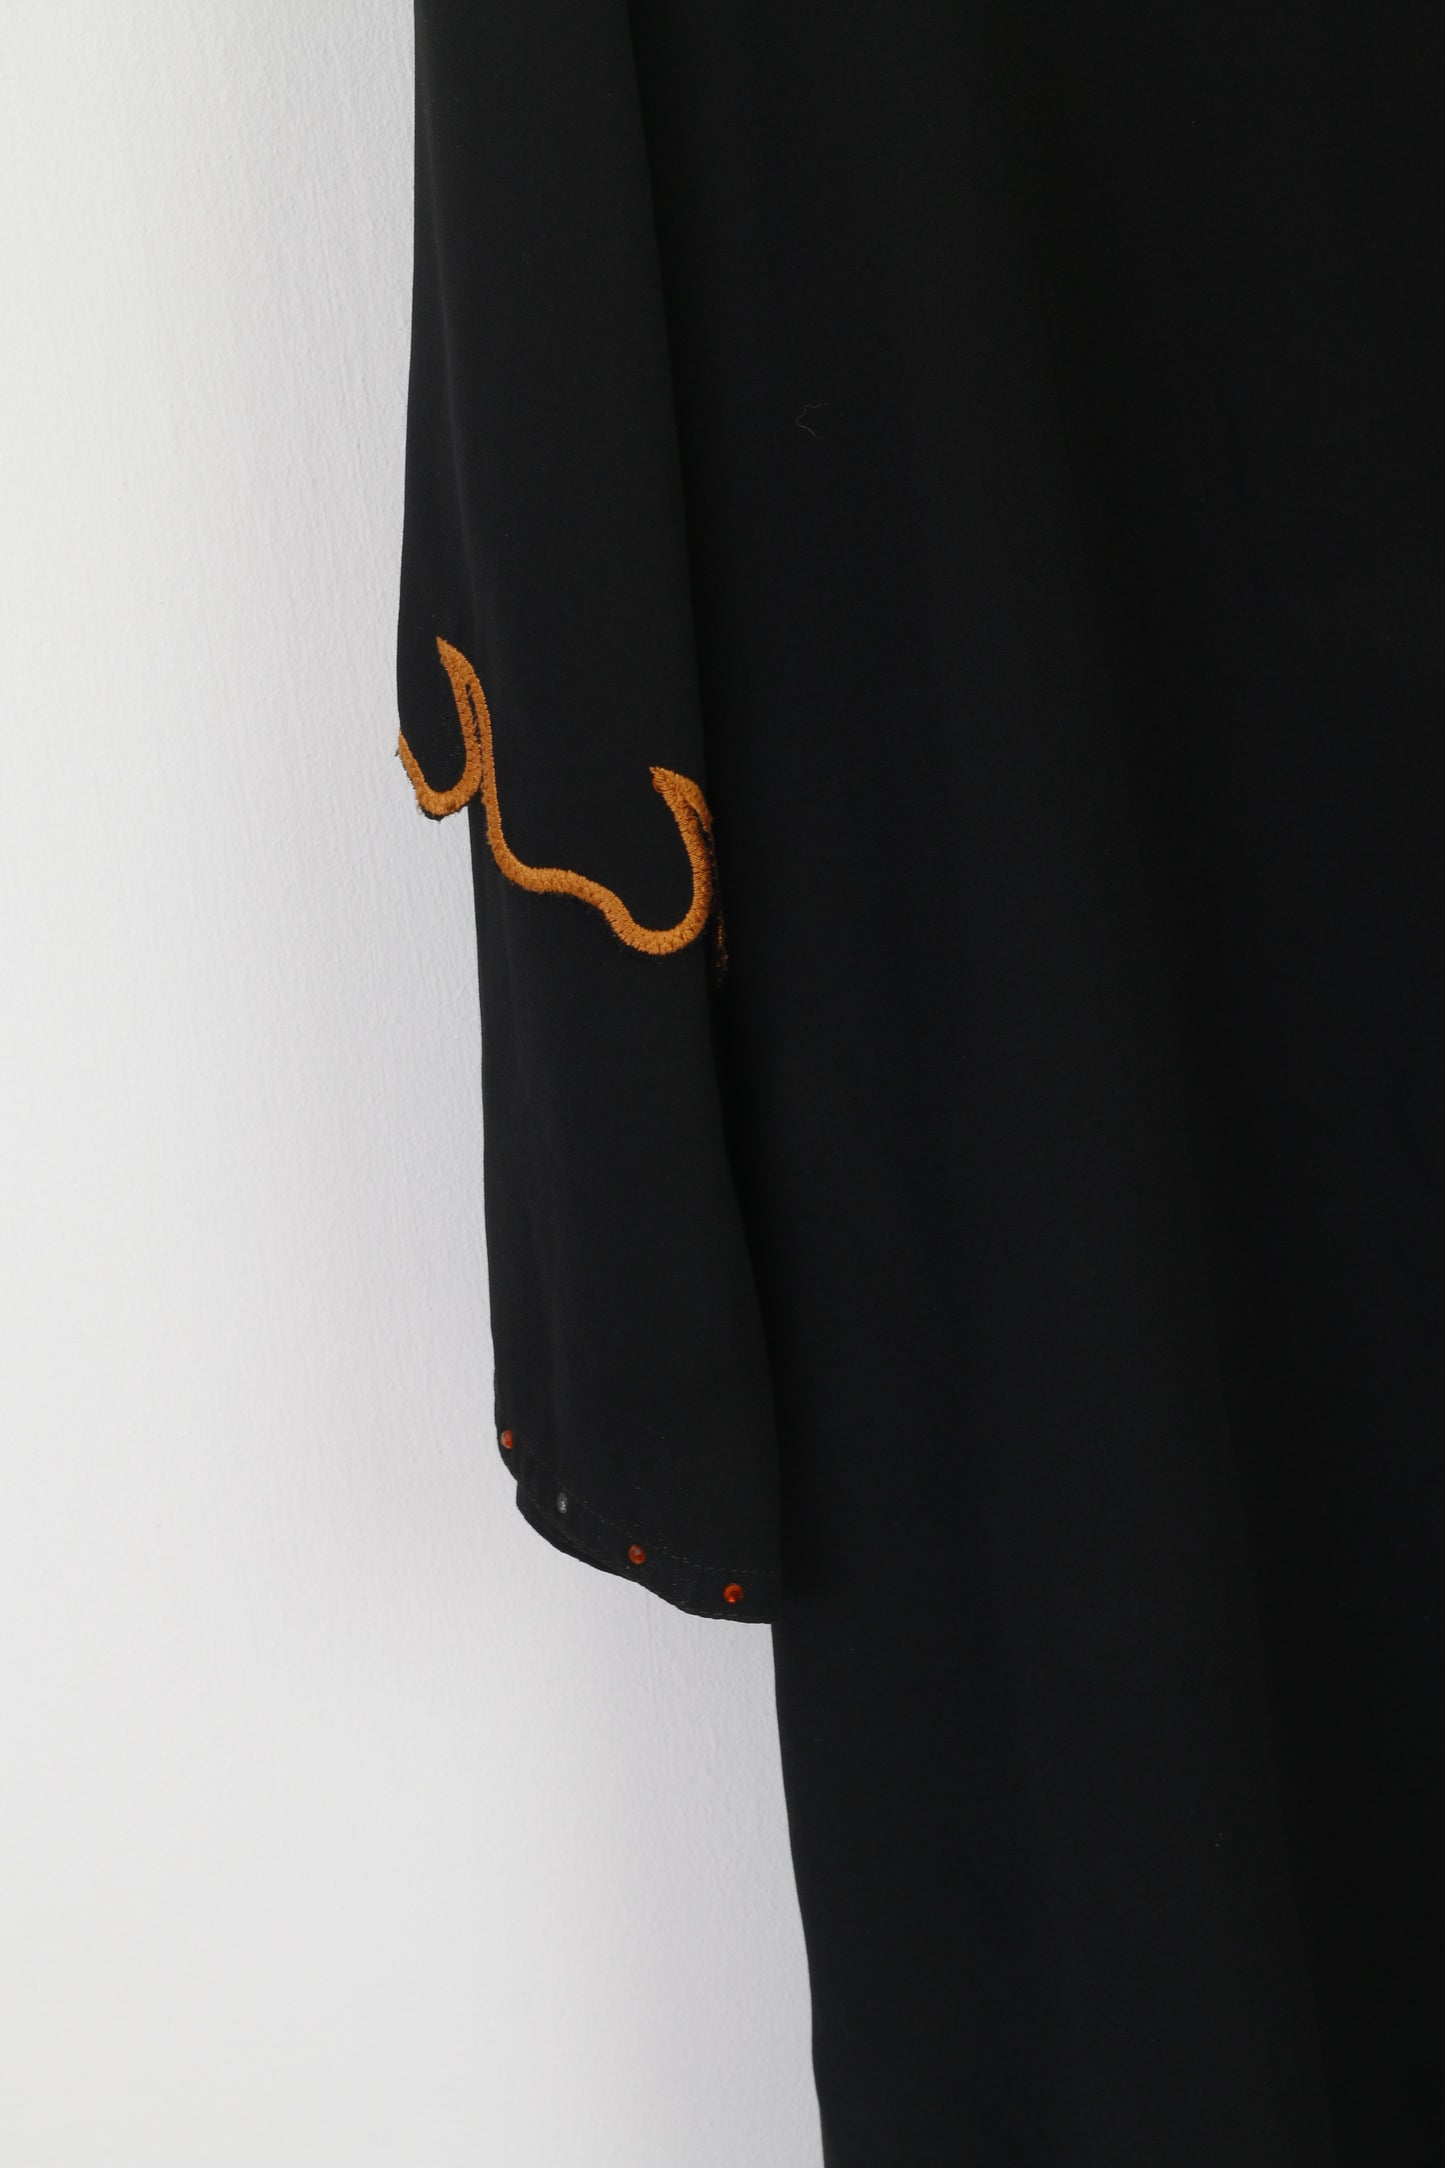 Organza Women L Long Dress Black Turkish Dubai Vintage Detailed Shoulder Pads